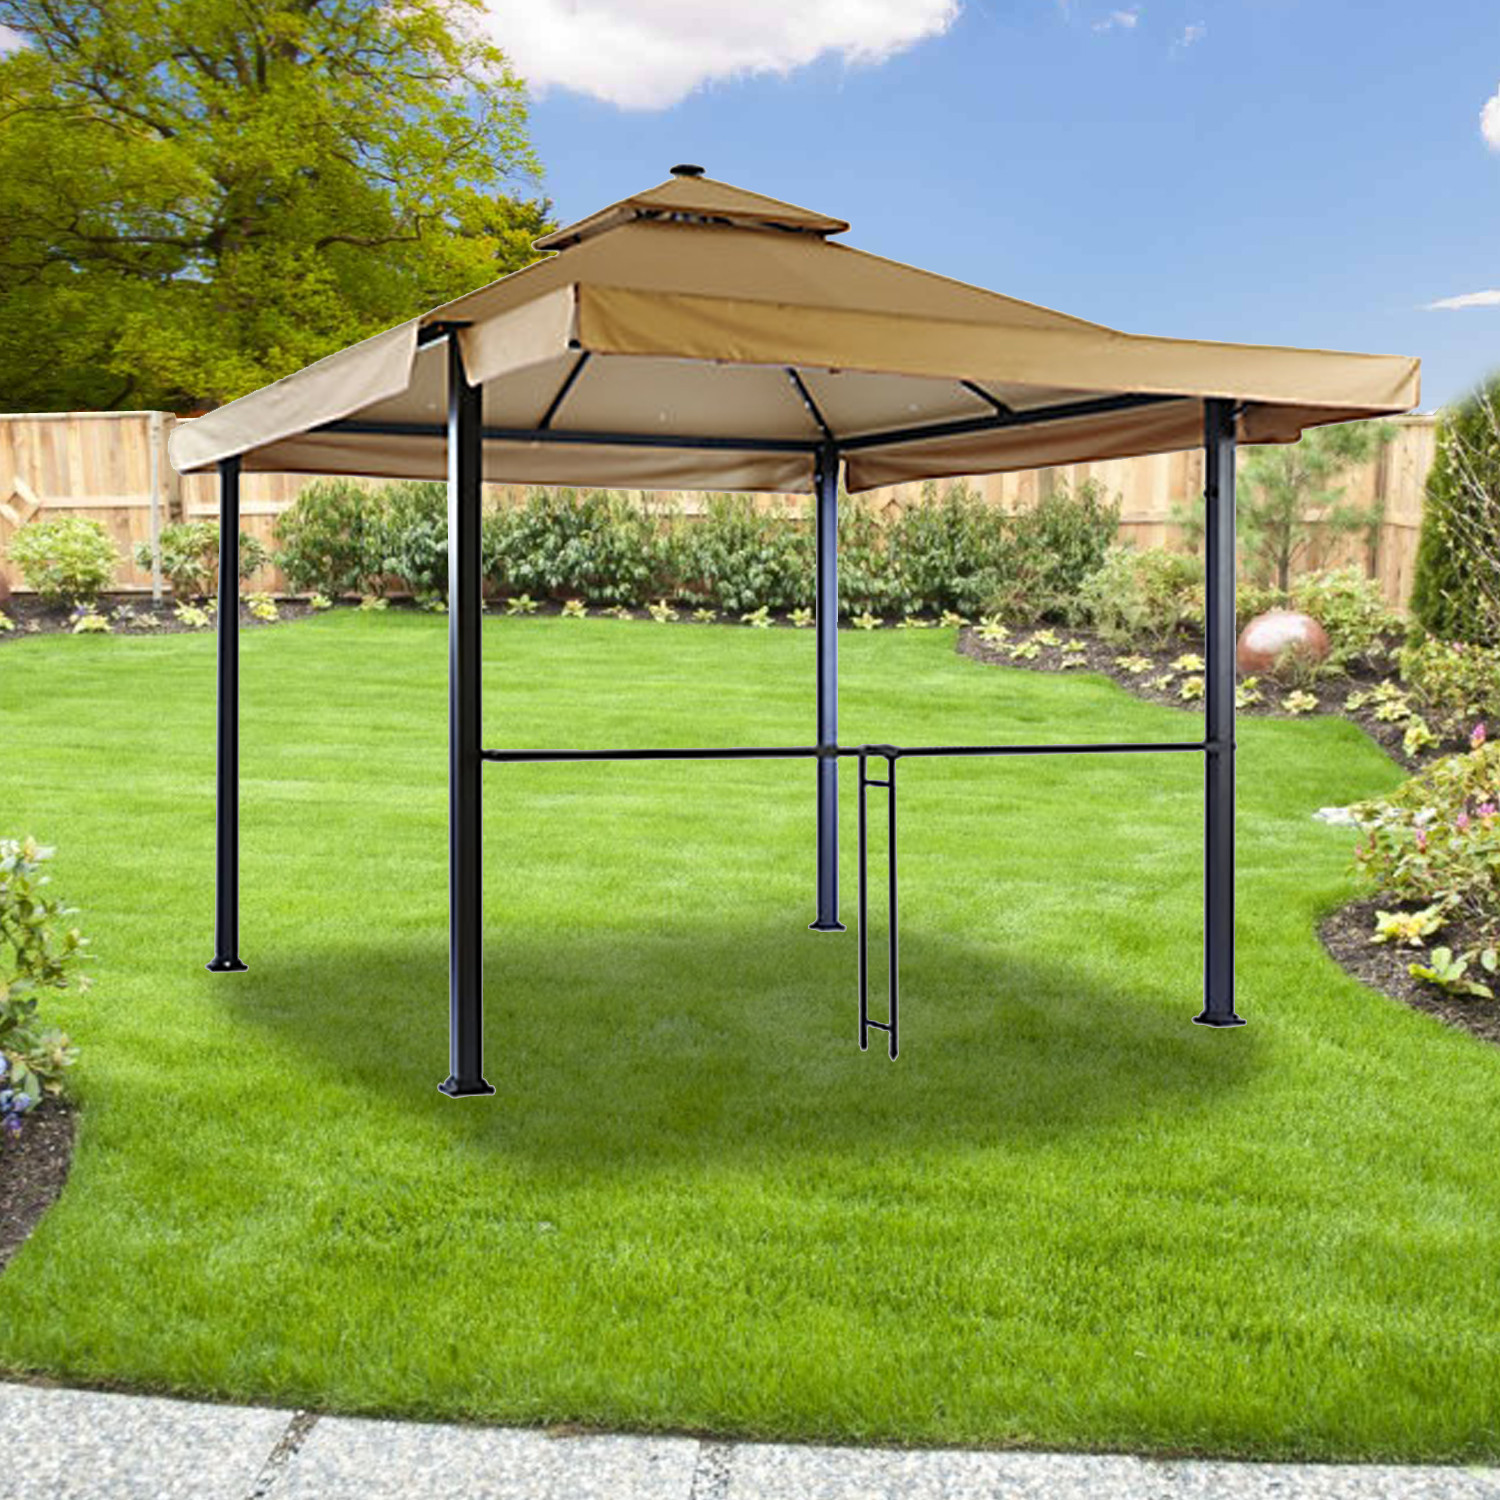 Backyard Creations Replacement Parts
 Menards Gazebo Replacement Canopy Garden Winds